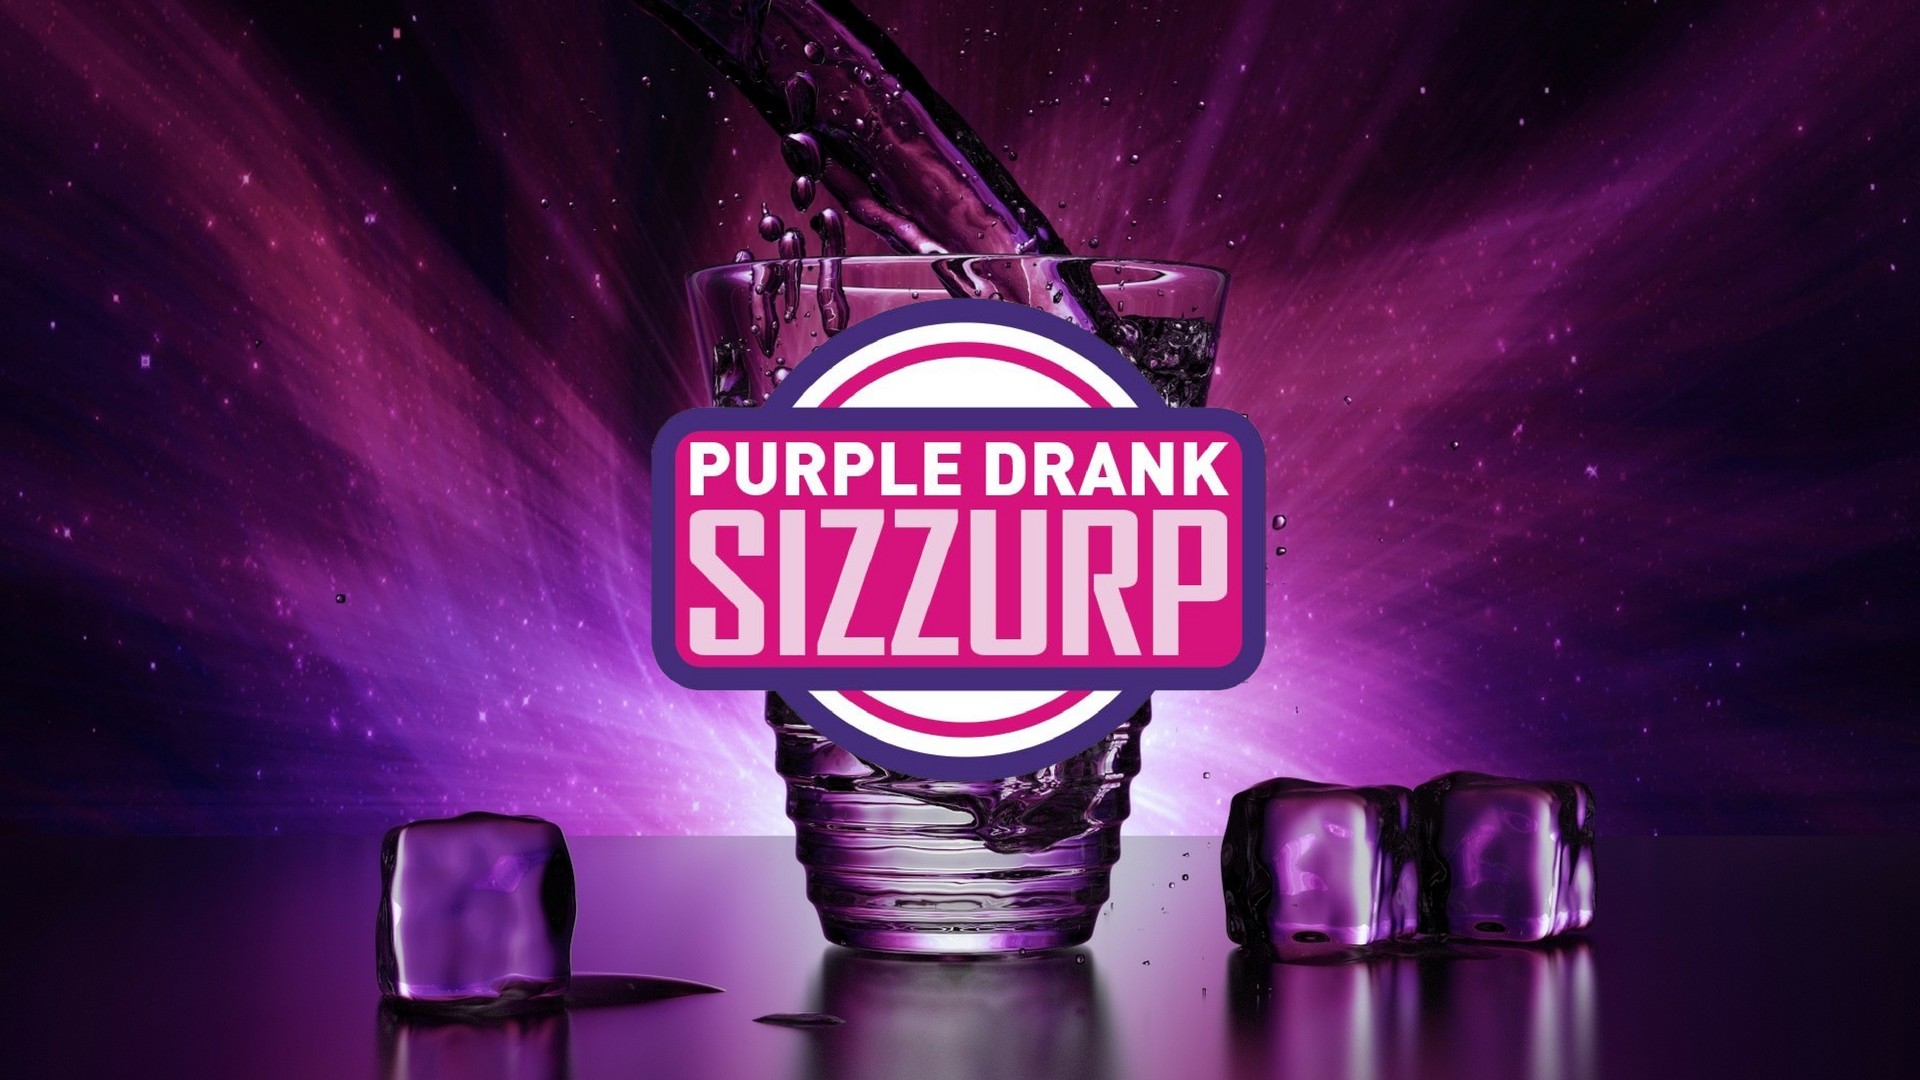 1920x1080 What is purple drank sizzurp and what does it do? | Purpledranksizzurp.com